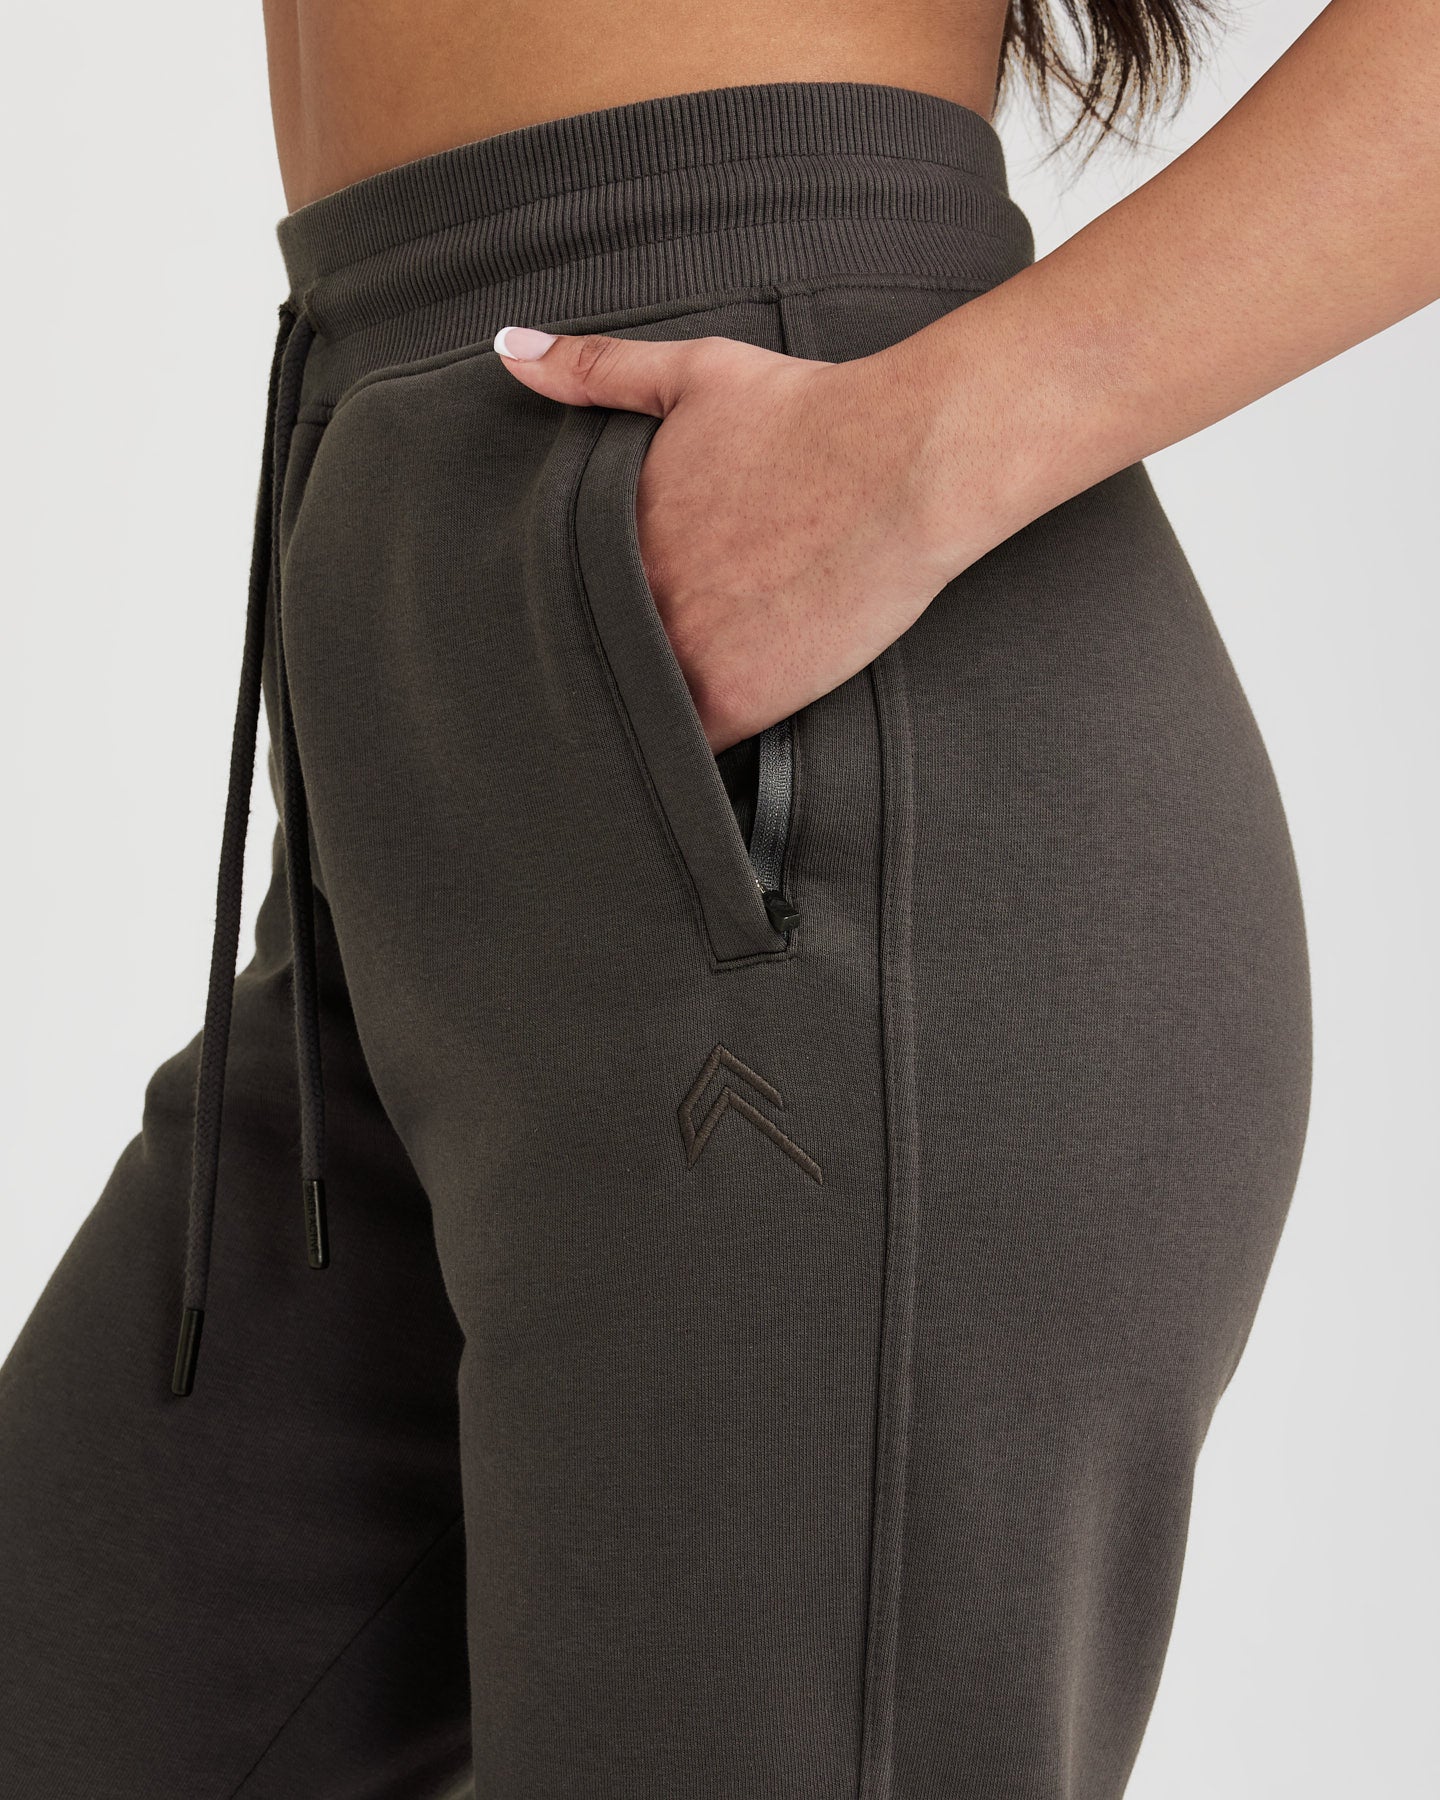 HeSaYep Women's High Waisted Sweatpants Workout Active Joggers Pants Baggy  Lounge Bottoms, Beige, XX-Large